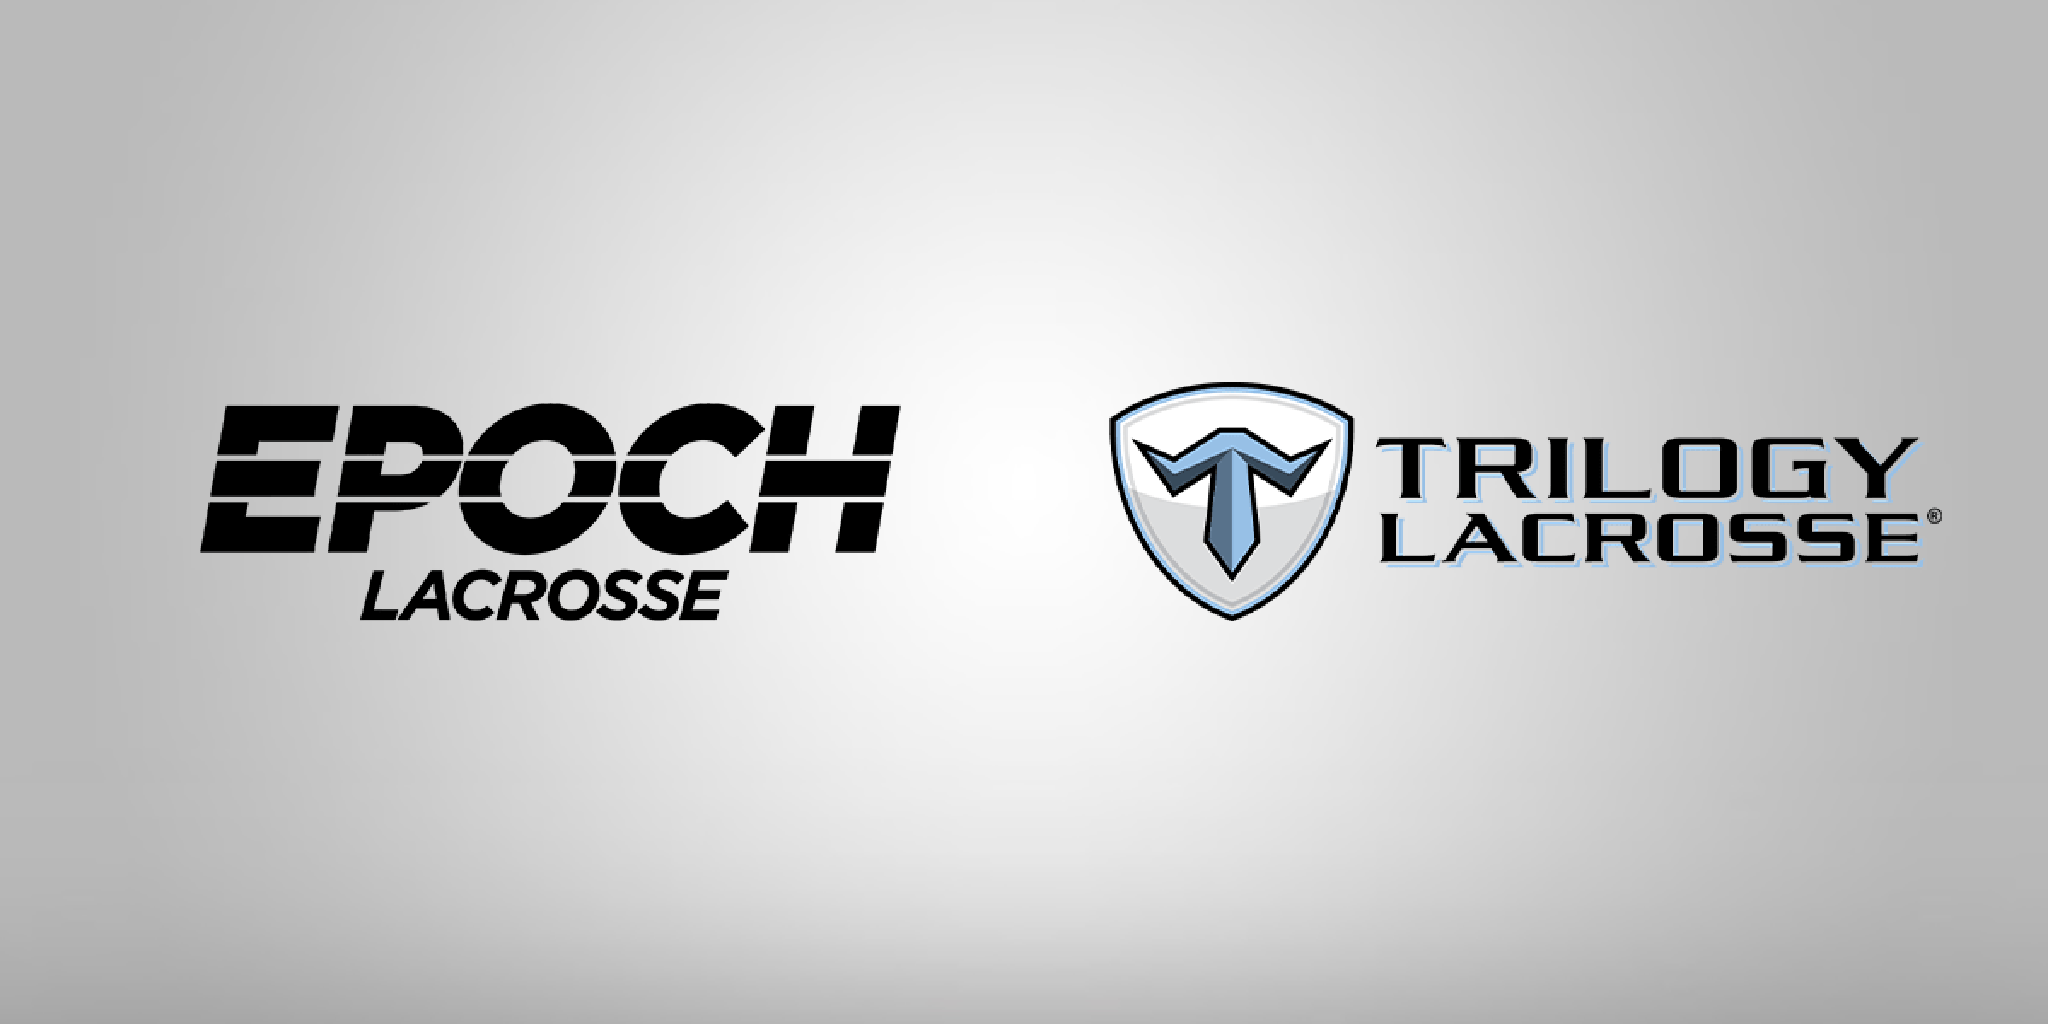 Trilogy Lacrosse announces multi-year partnership with Epoch Lacrosse